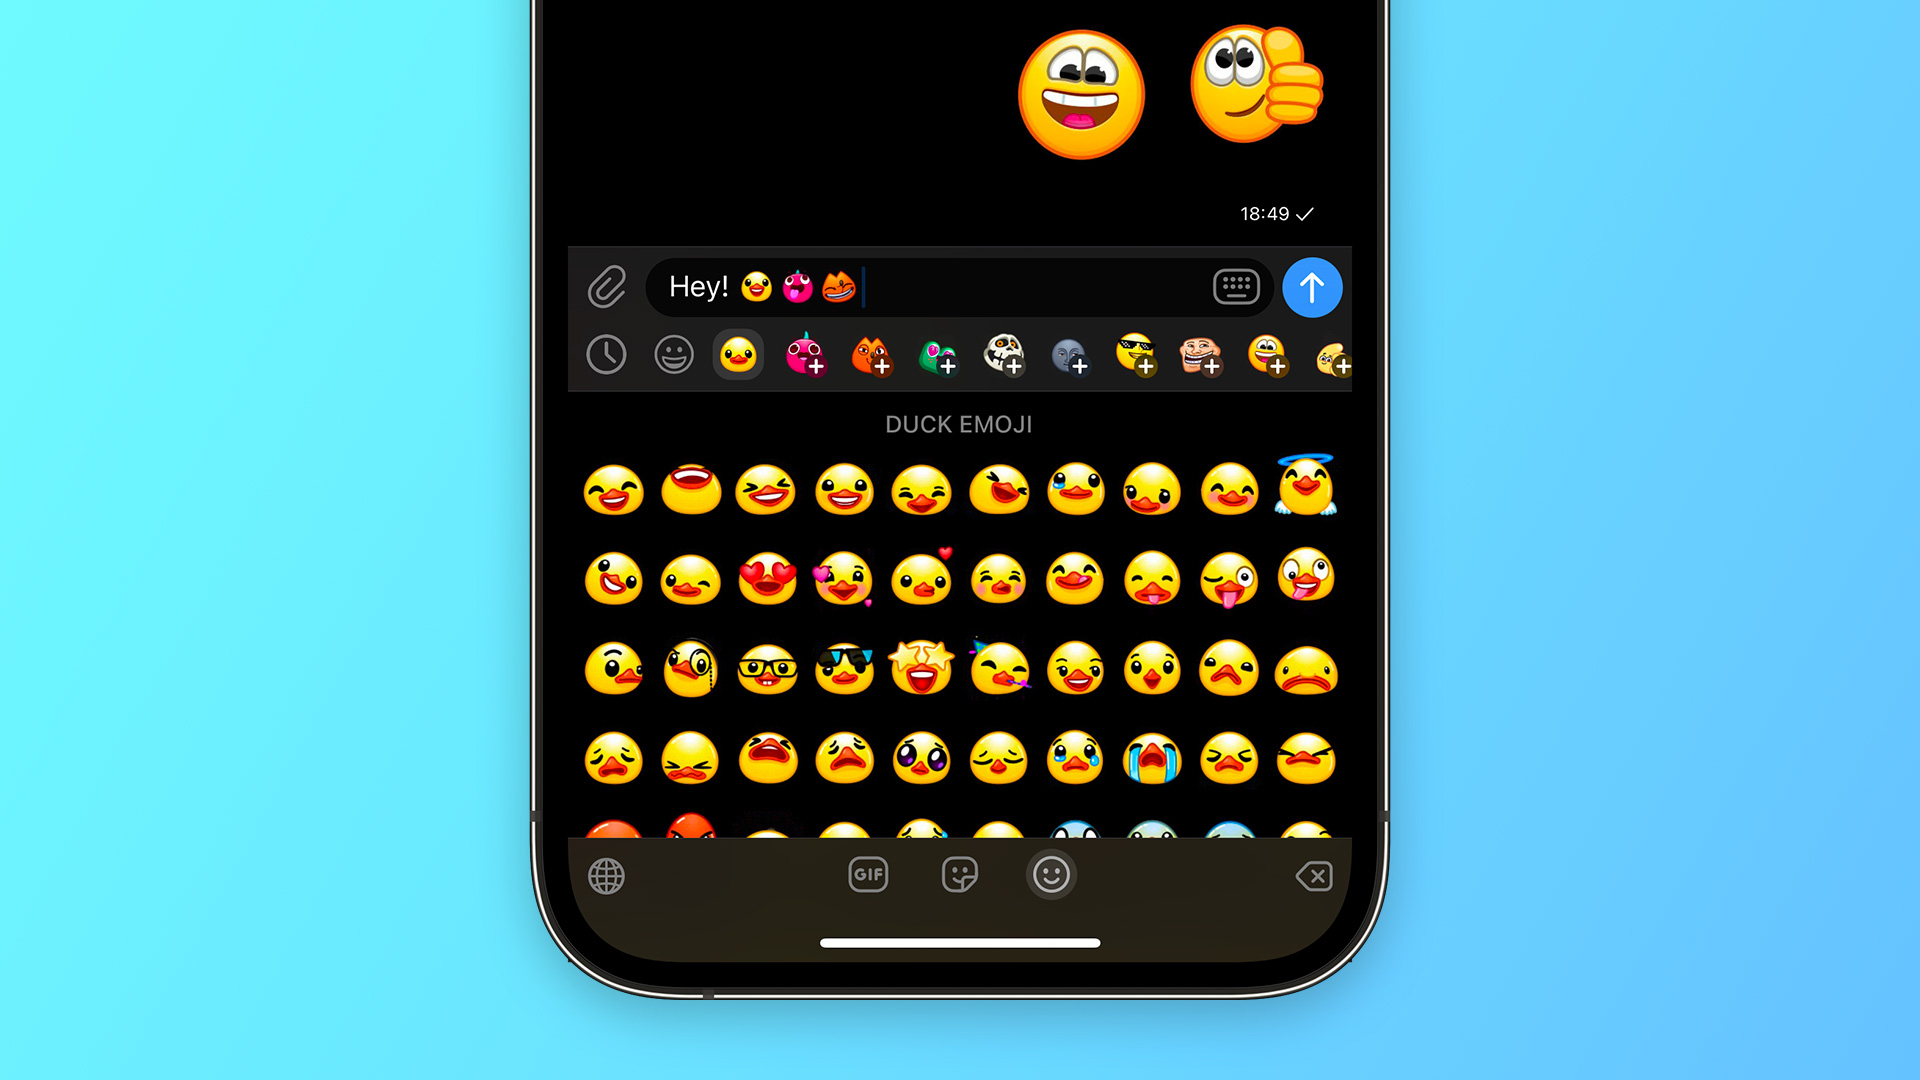 Telegram update brings new animated emoji - 9to5Mac